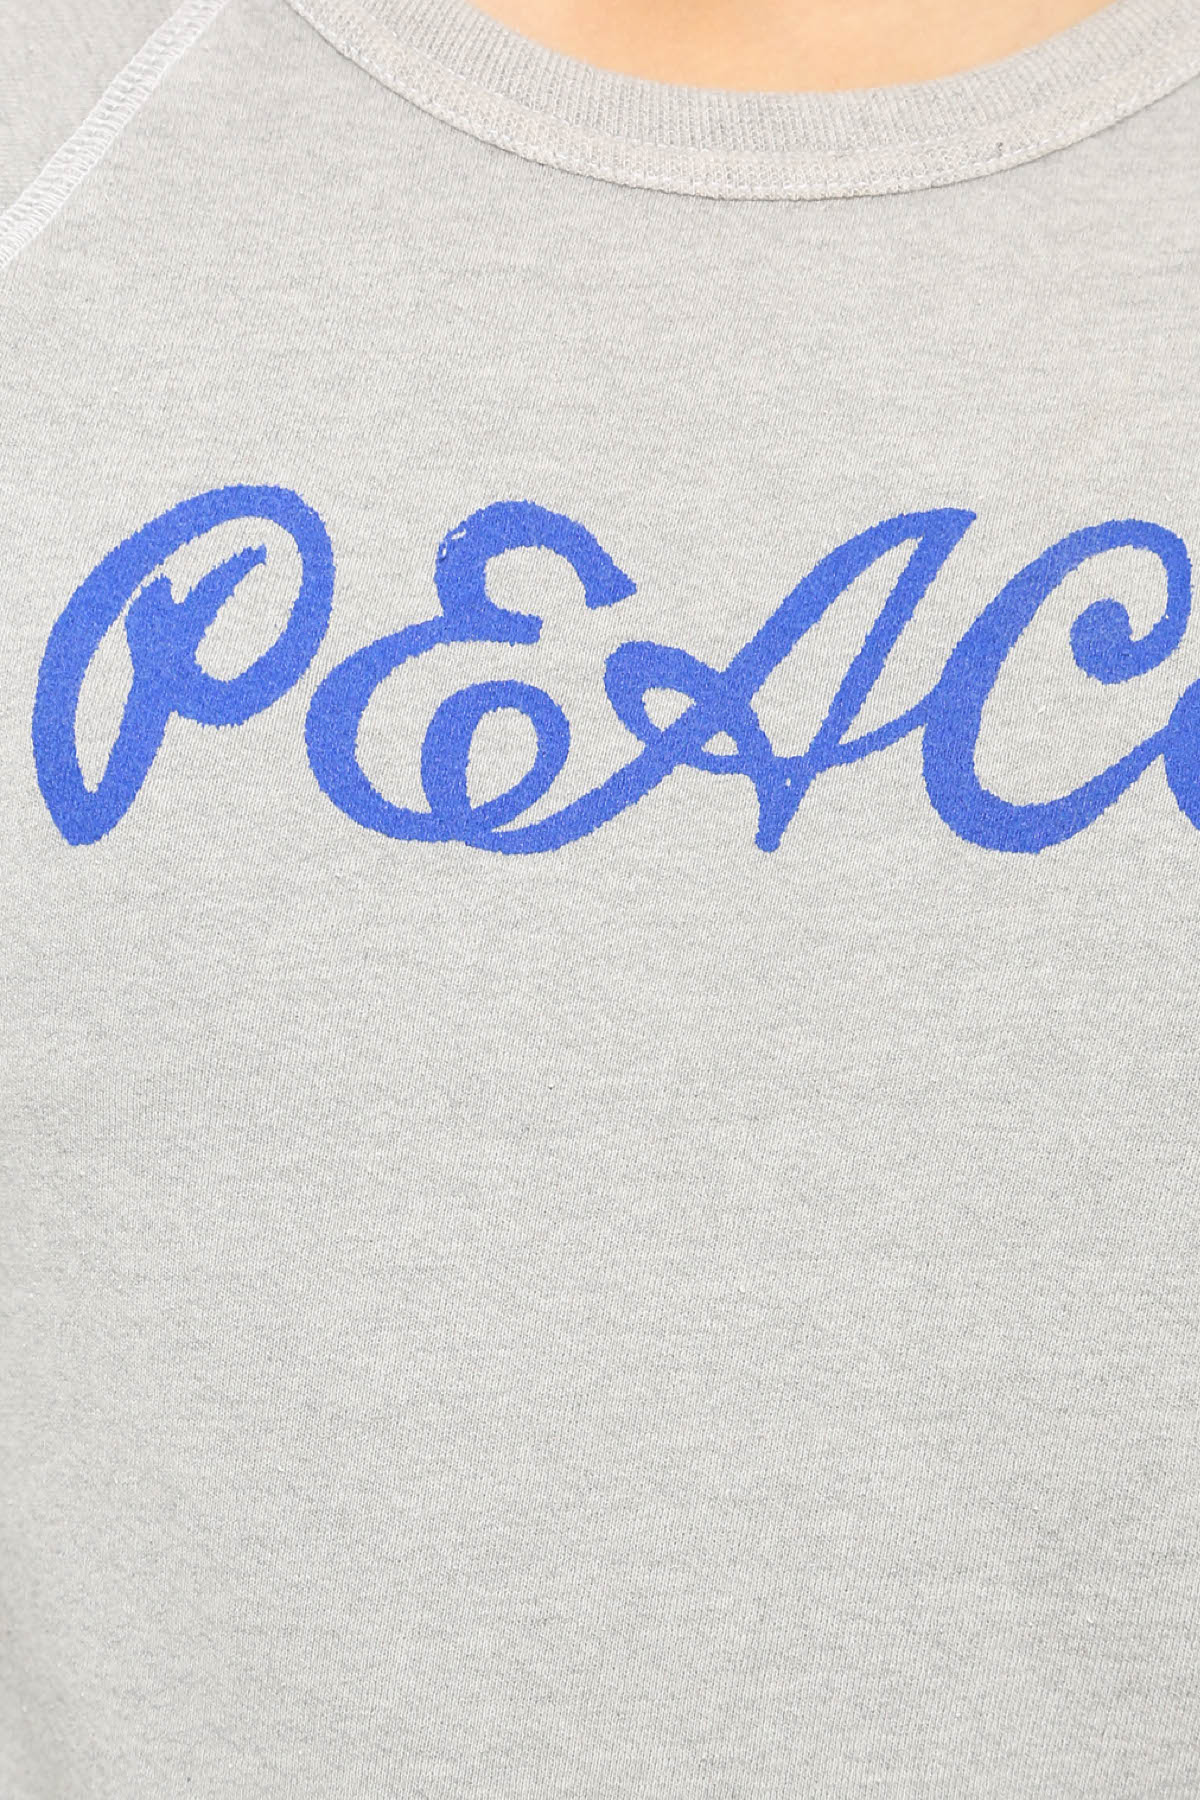 Rxmance Unisex Oatmeal 'Peace' Sweatshirt